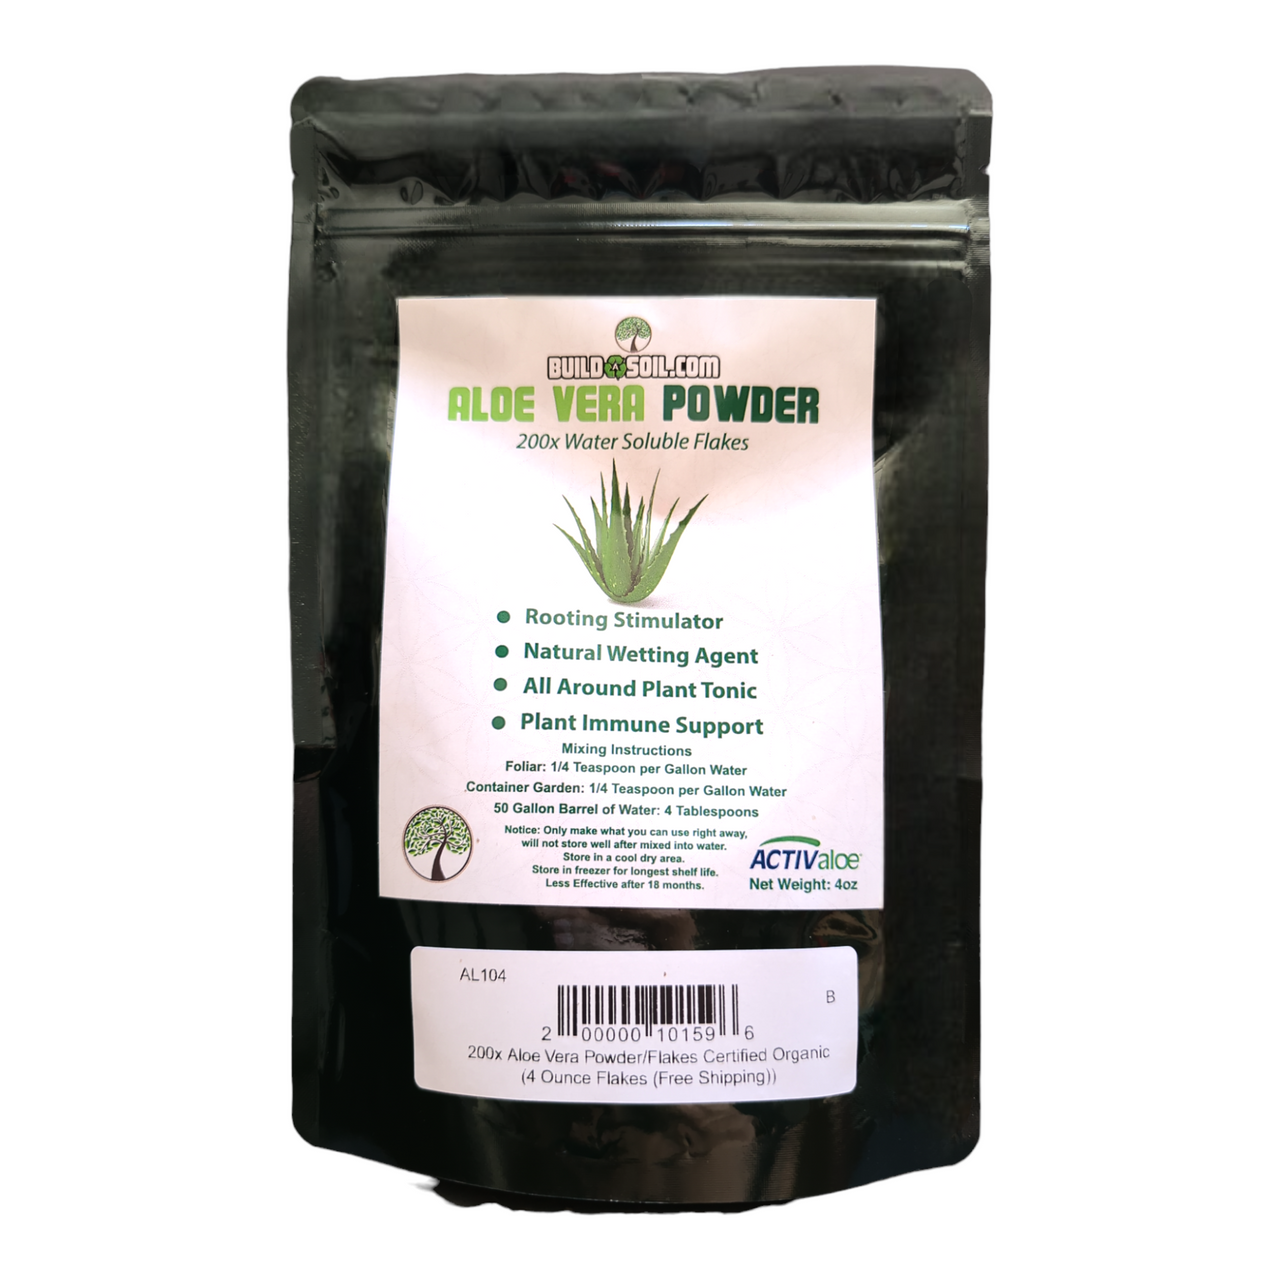 200x Aloe Vera Powder Flakes Certified Organic